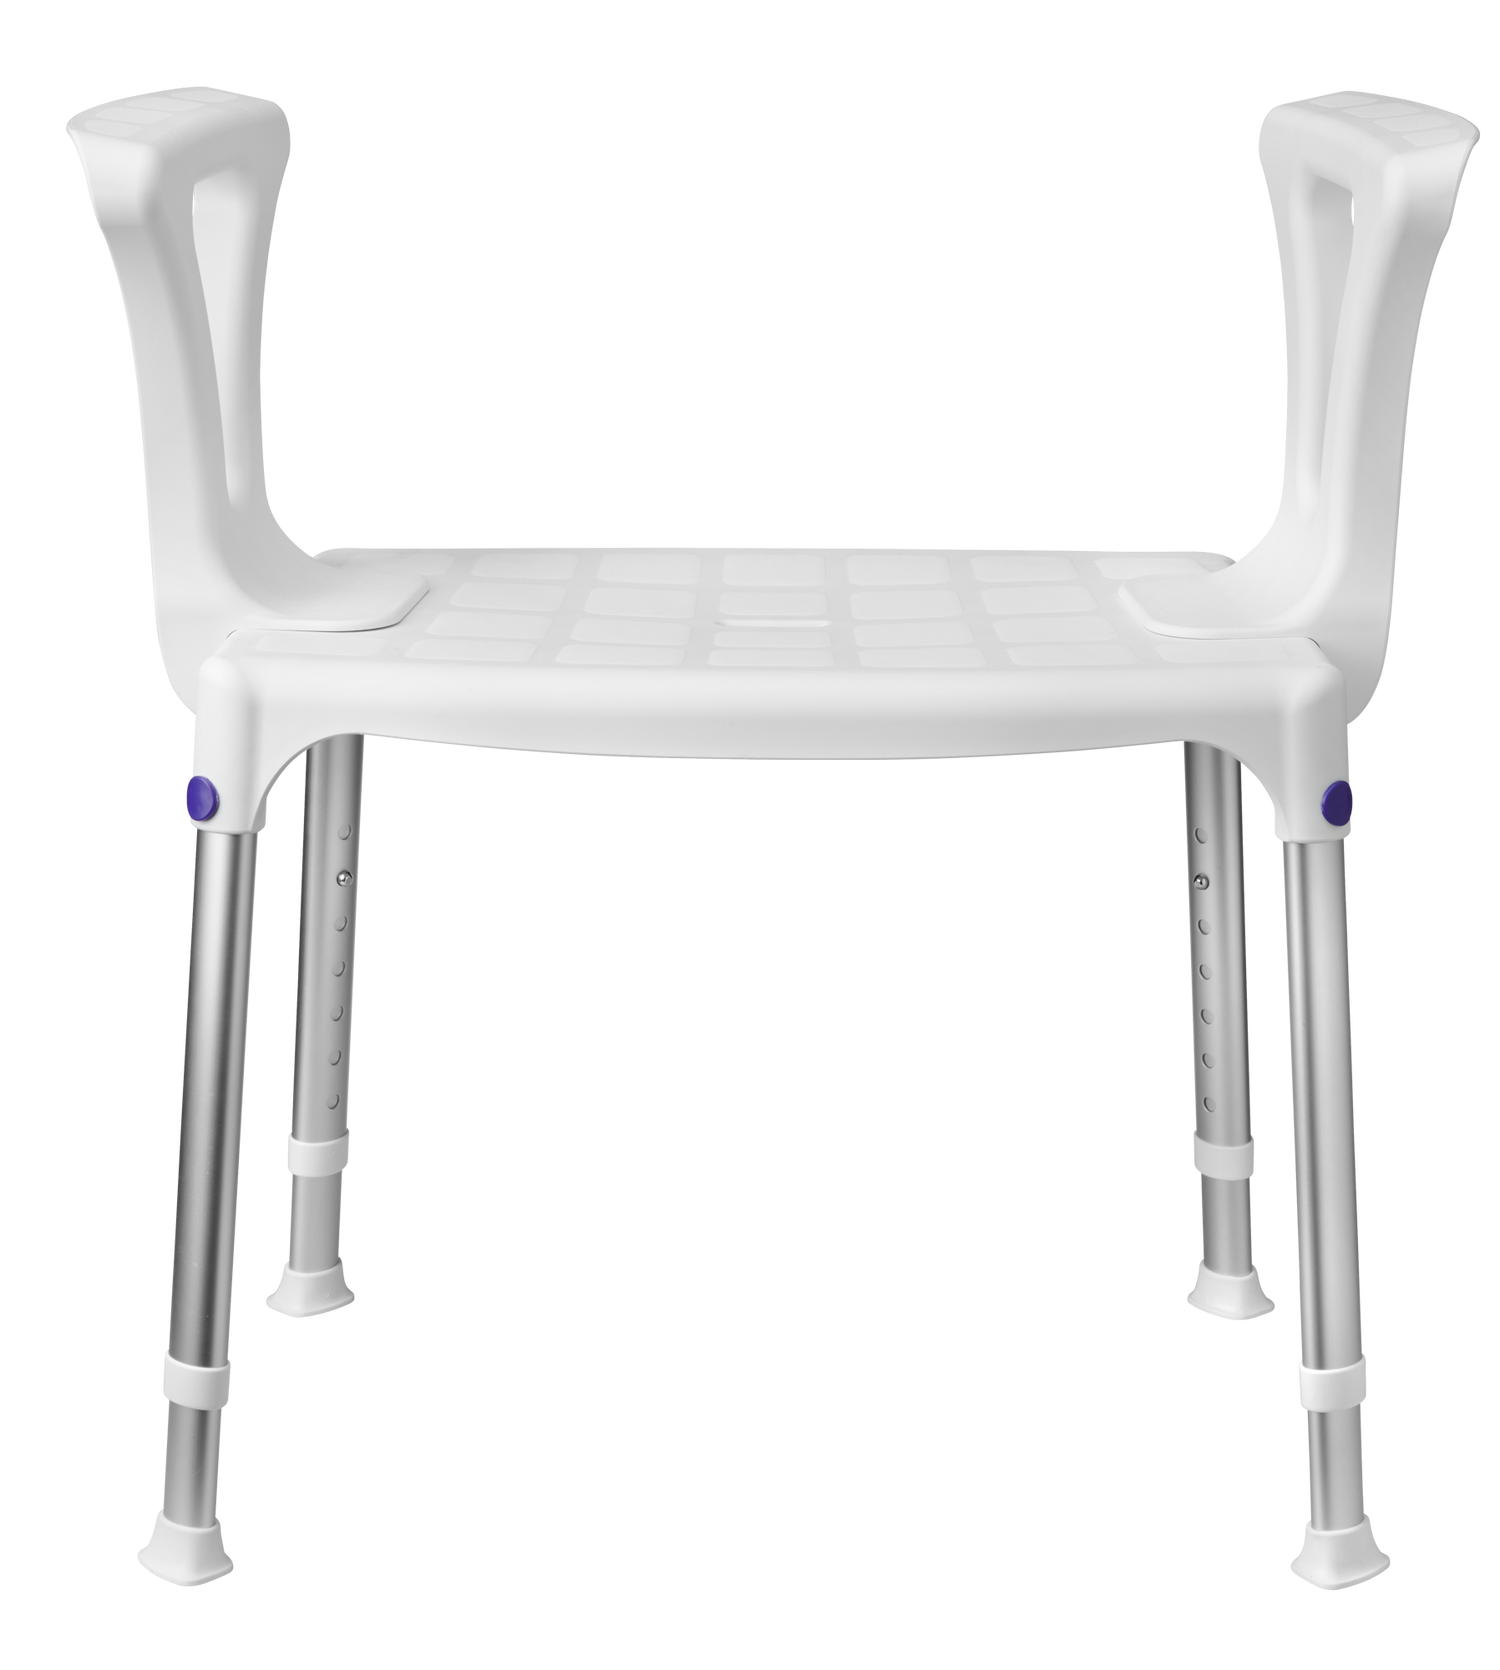 SecuCare Quattro armrest for shower chair